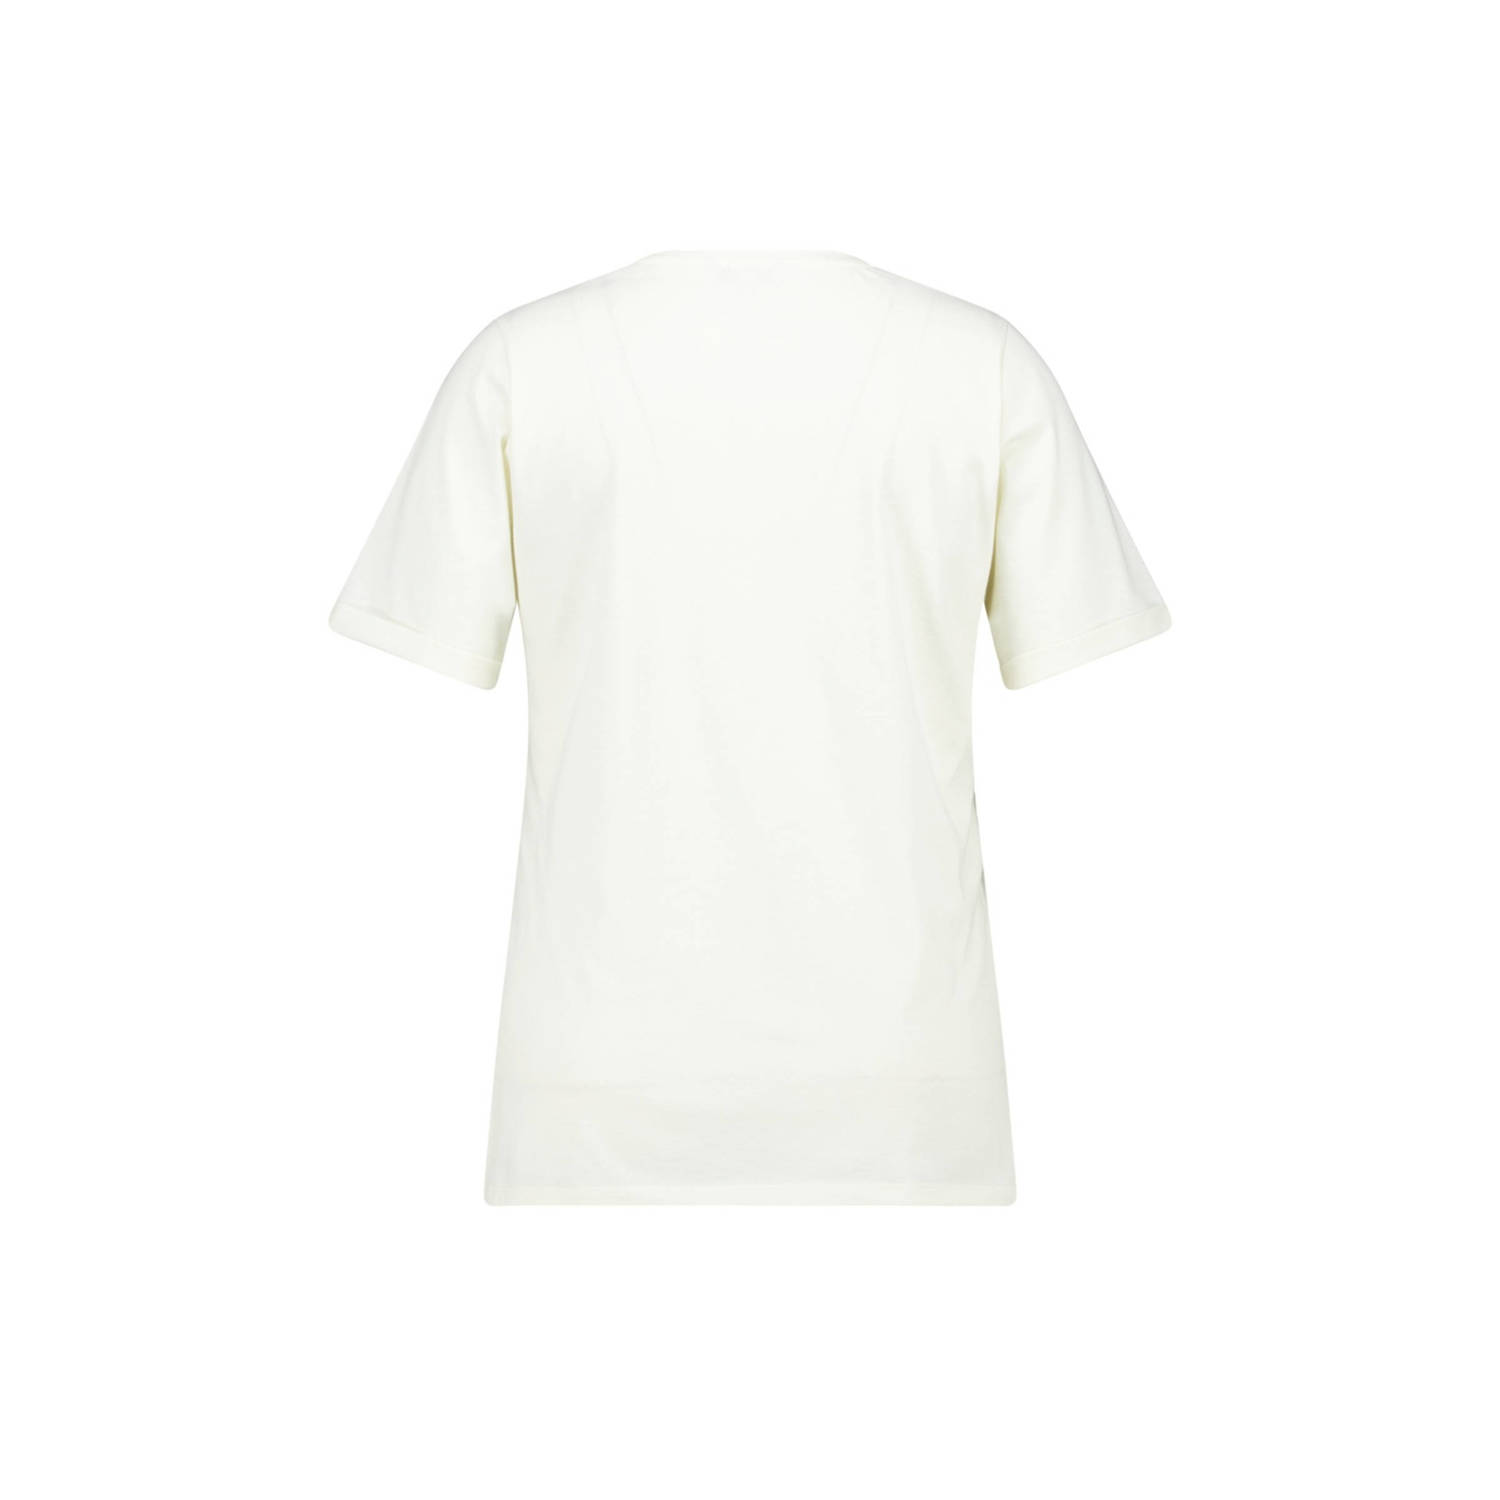 MS Mode T-shirt met tekst wit